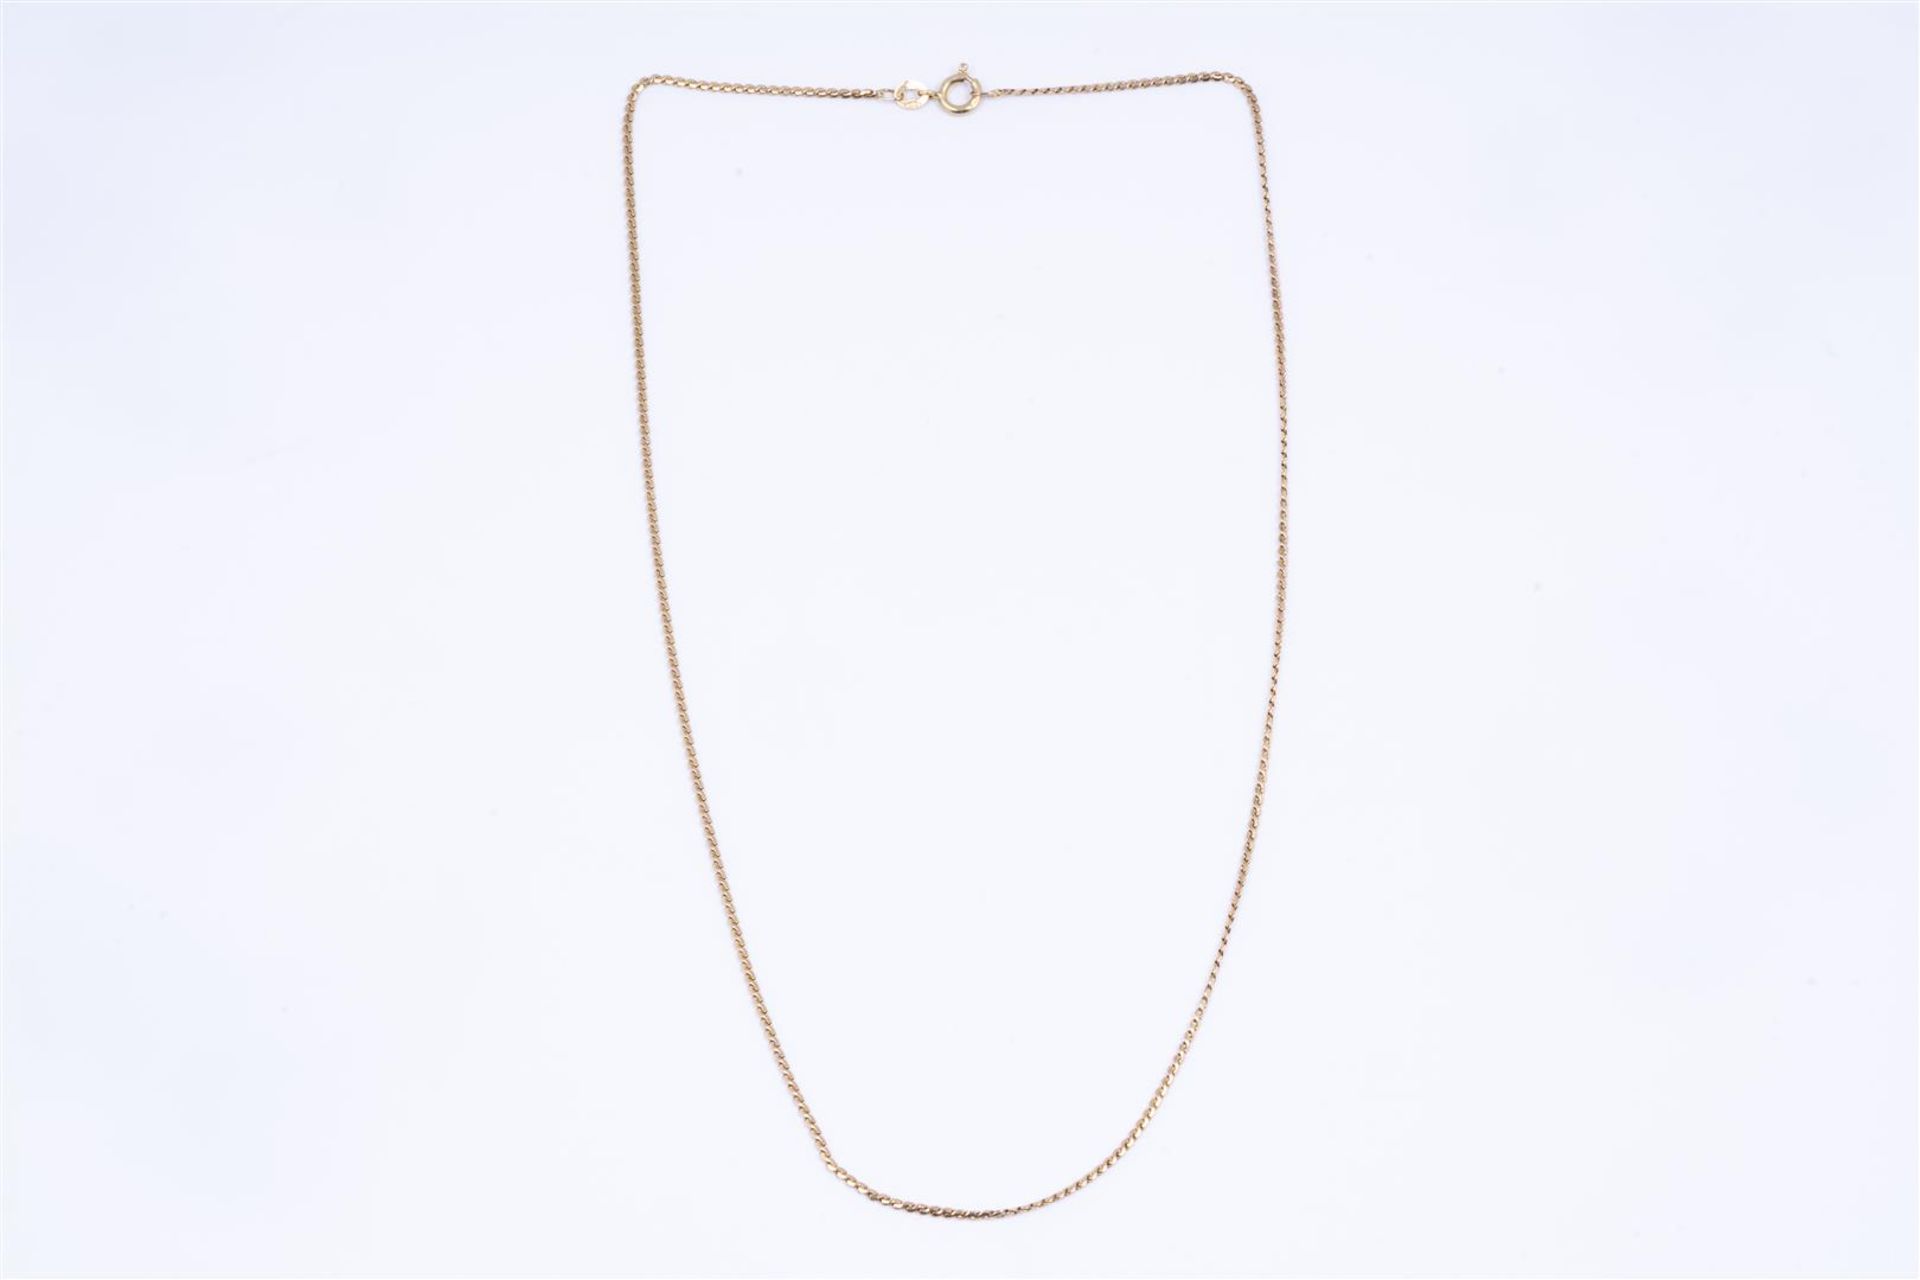 14kt yellow gold S-shape link necklace.
Length: 43.5 cm
Link width: 1.35 - 1.40 mm.
Inspection marks